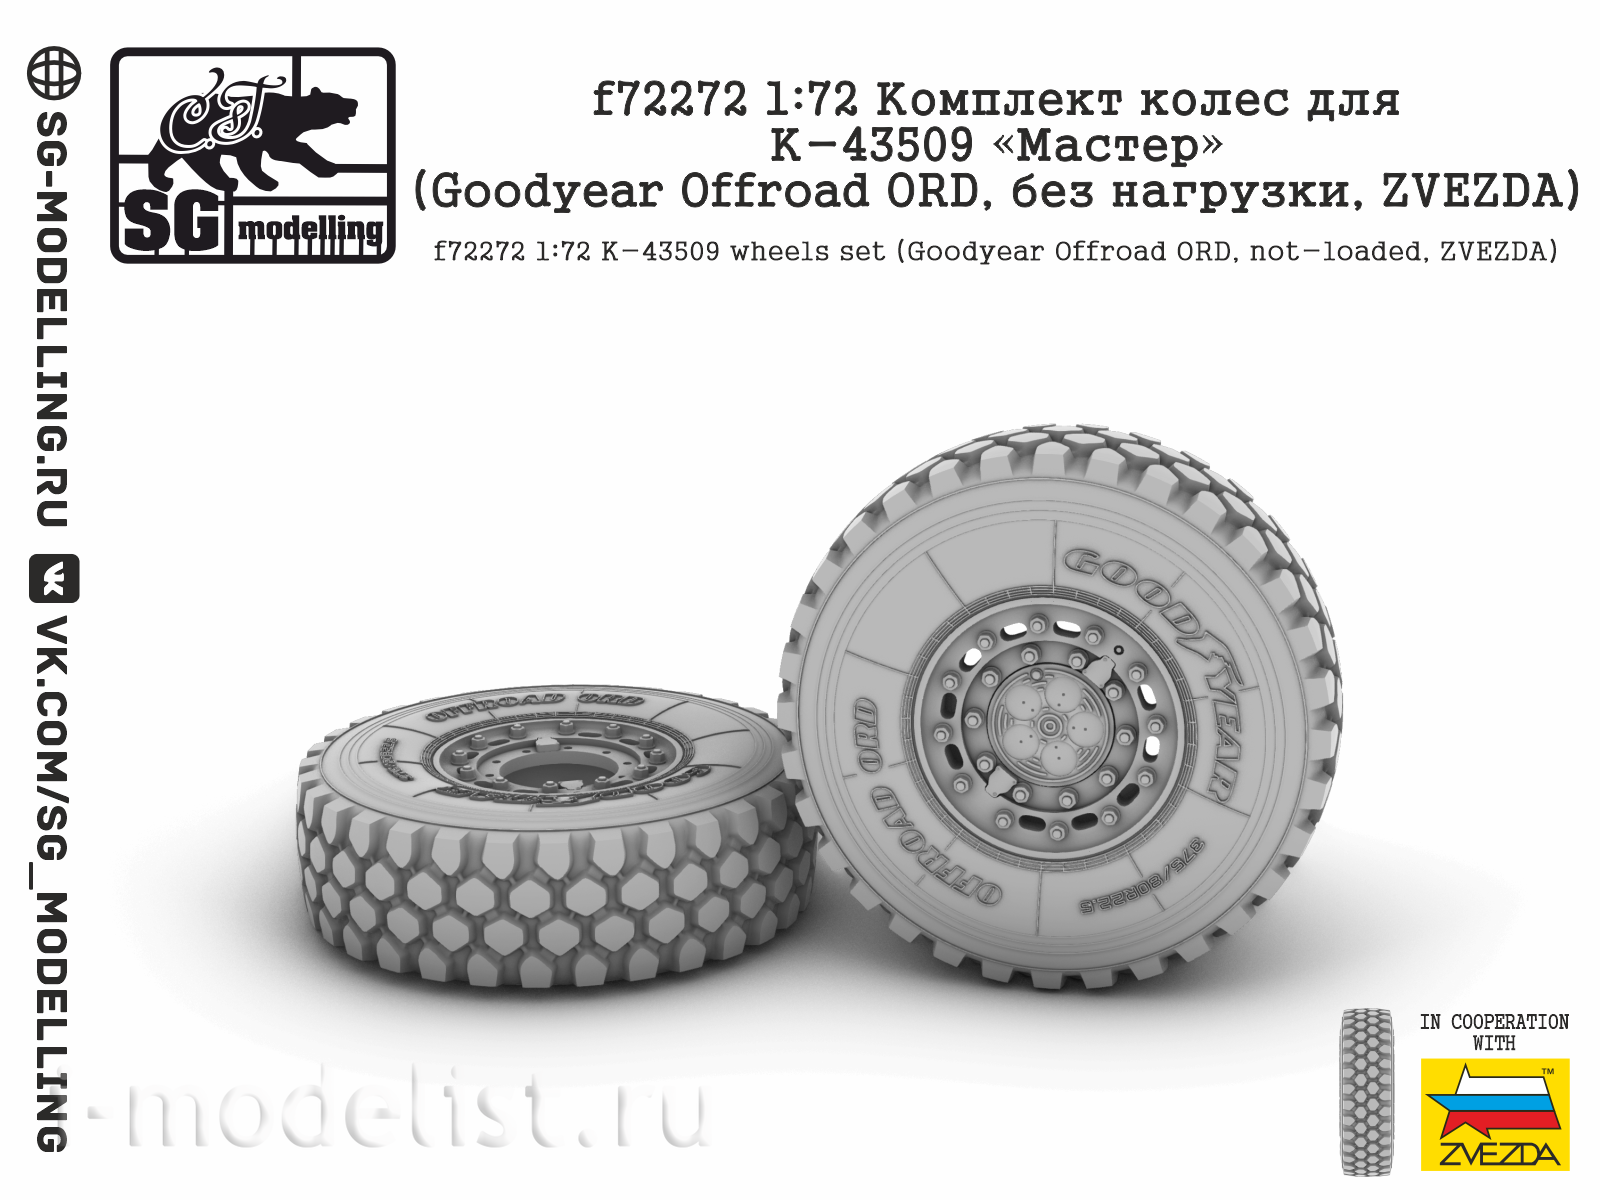 f72272 SG Modelling 1/72 Комплект колес для К-43509 (Goodyear Offroad ORD, без нагрузки, ZVEZDA)